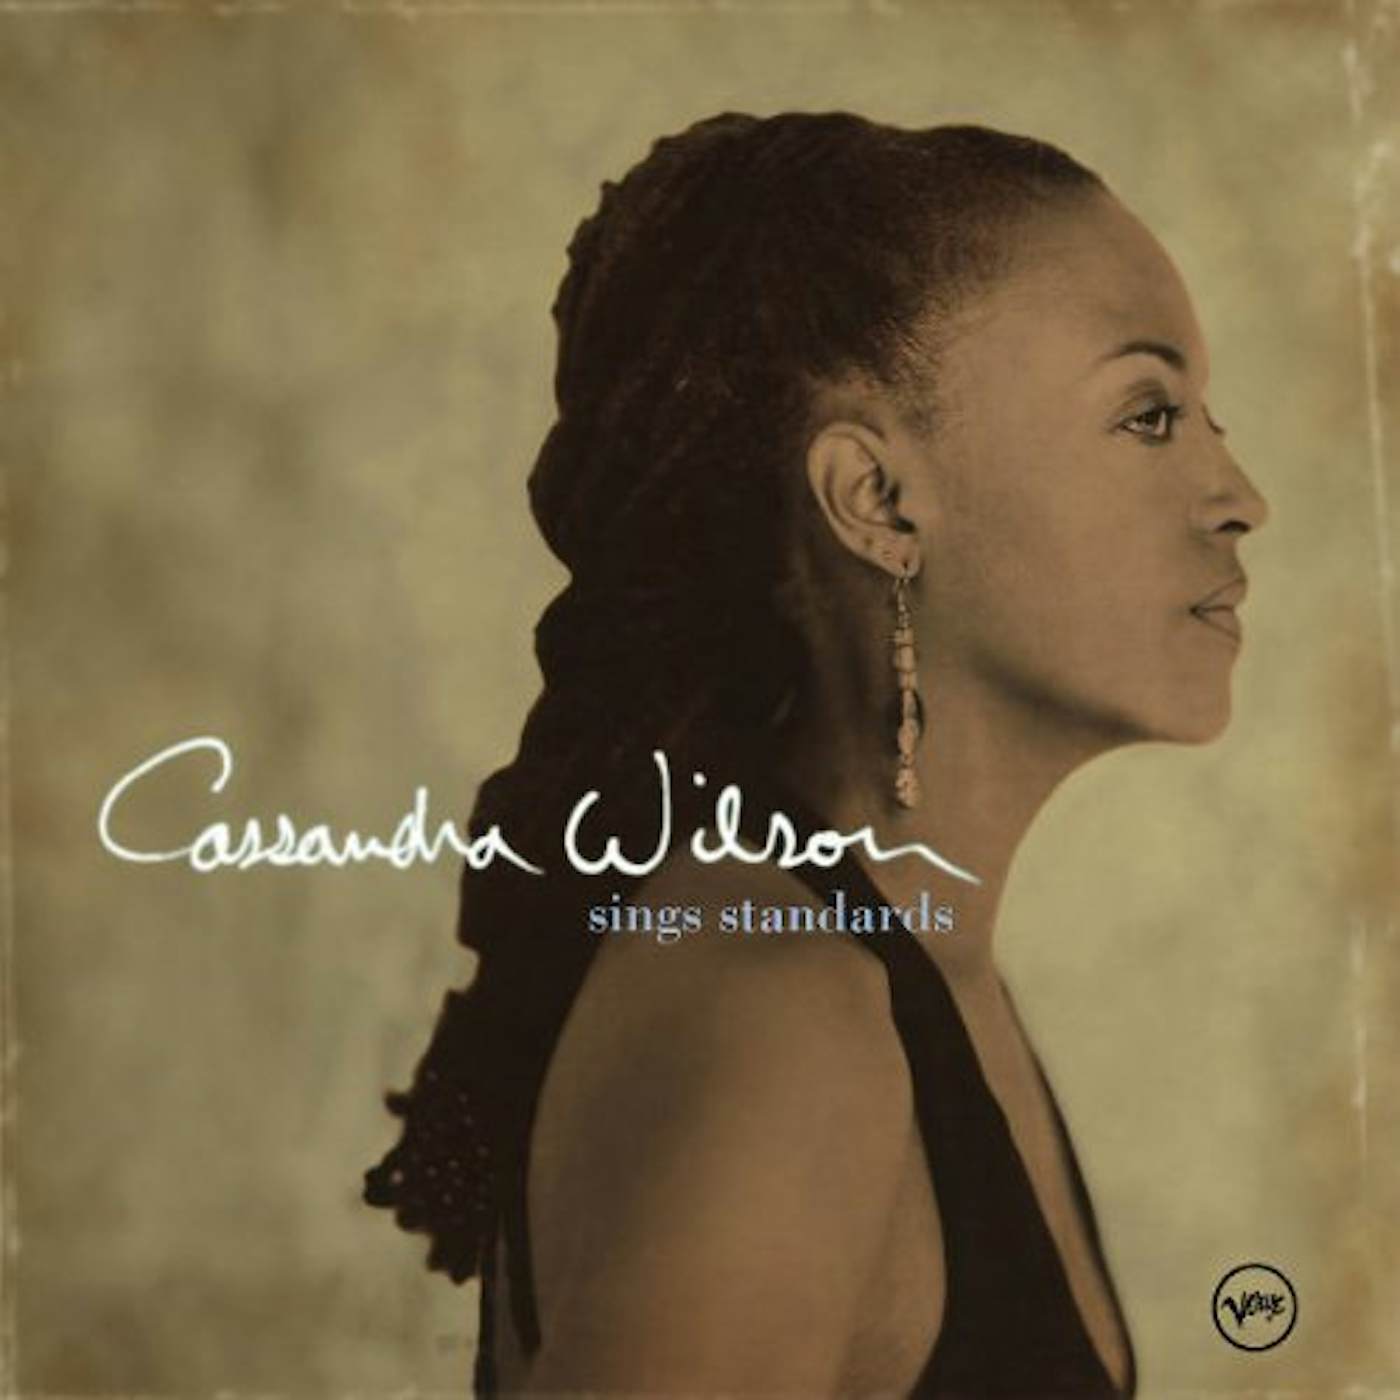 Cassandra Wilson SINGS STANDARDS CD